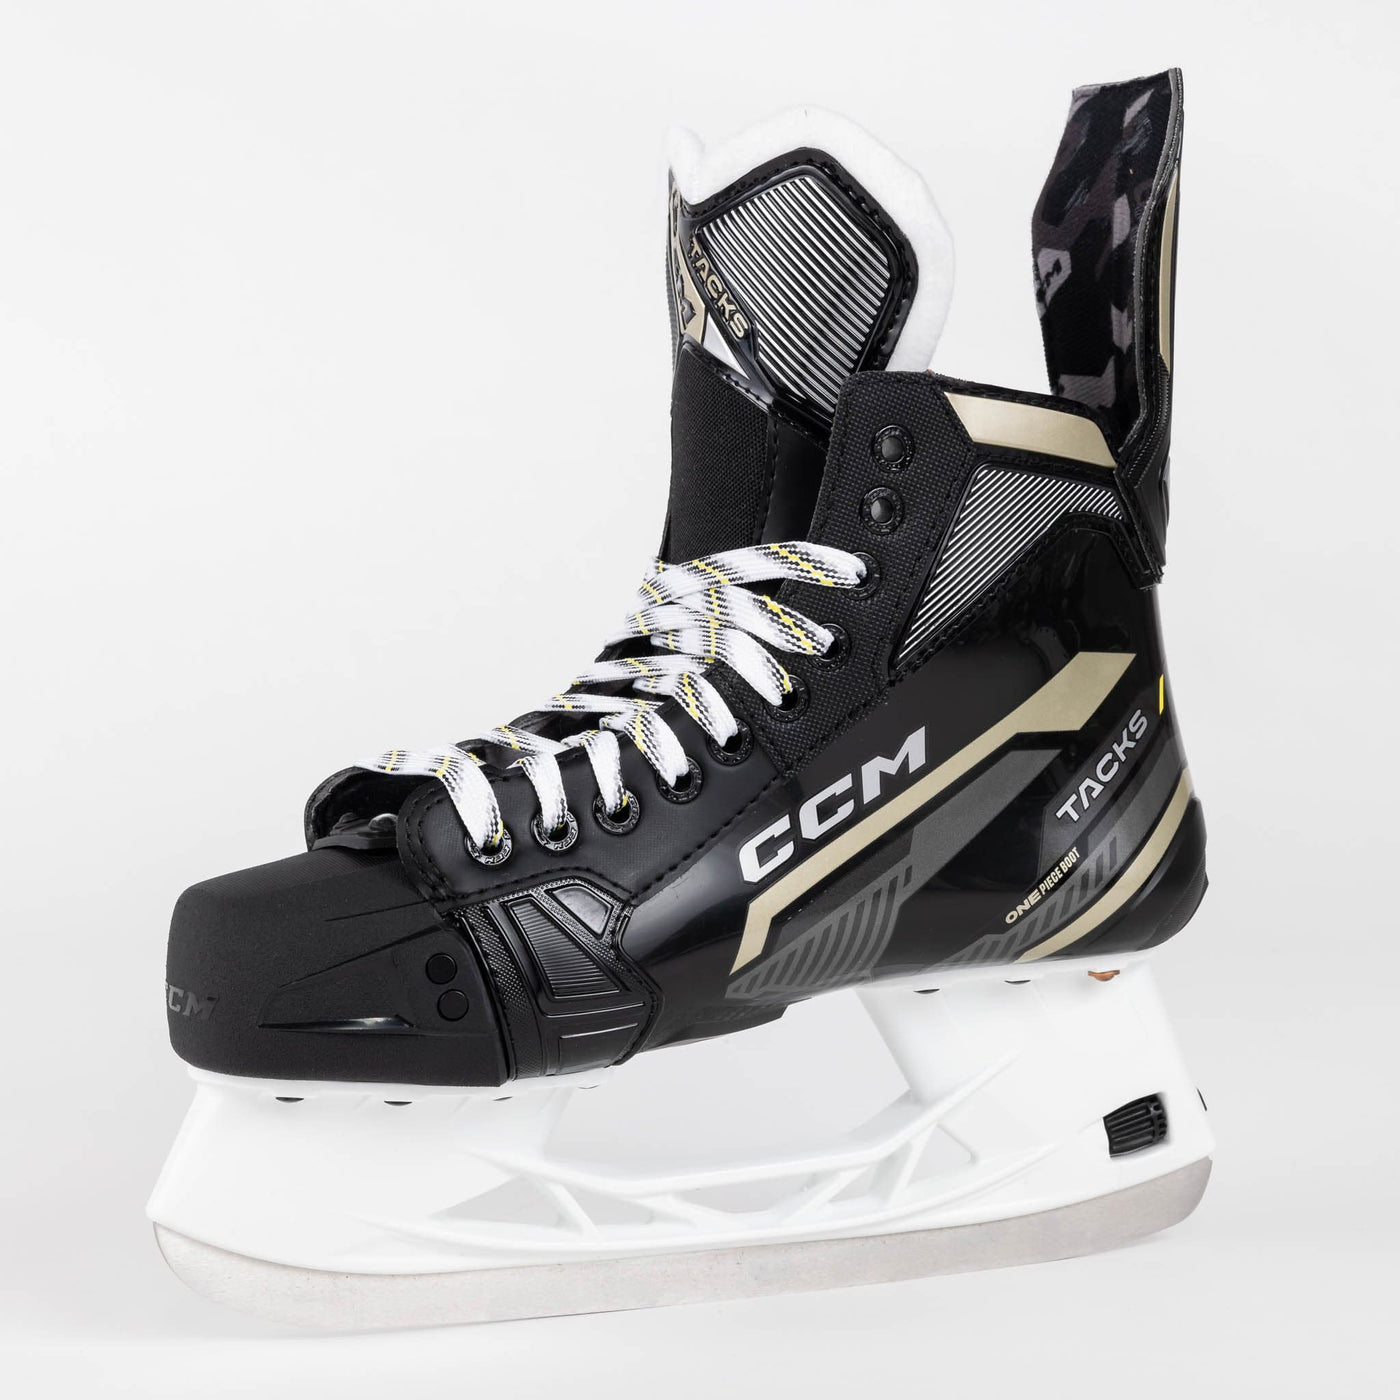 CCM Tacks AS570 Senior Hockey Skates - The Hockey Shop Source For Sports